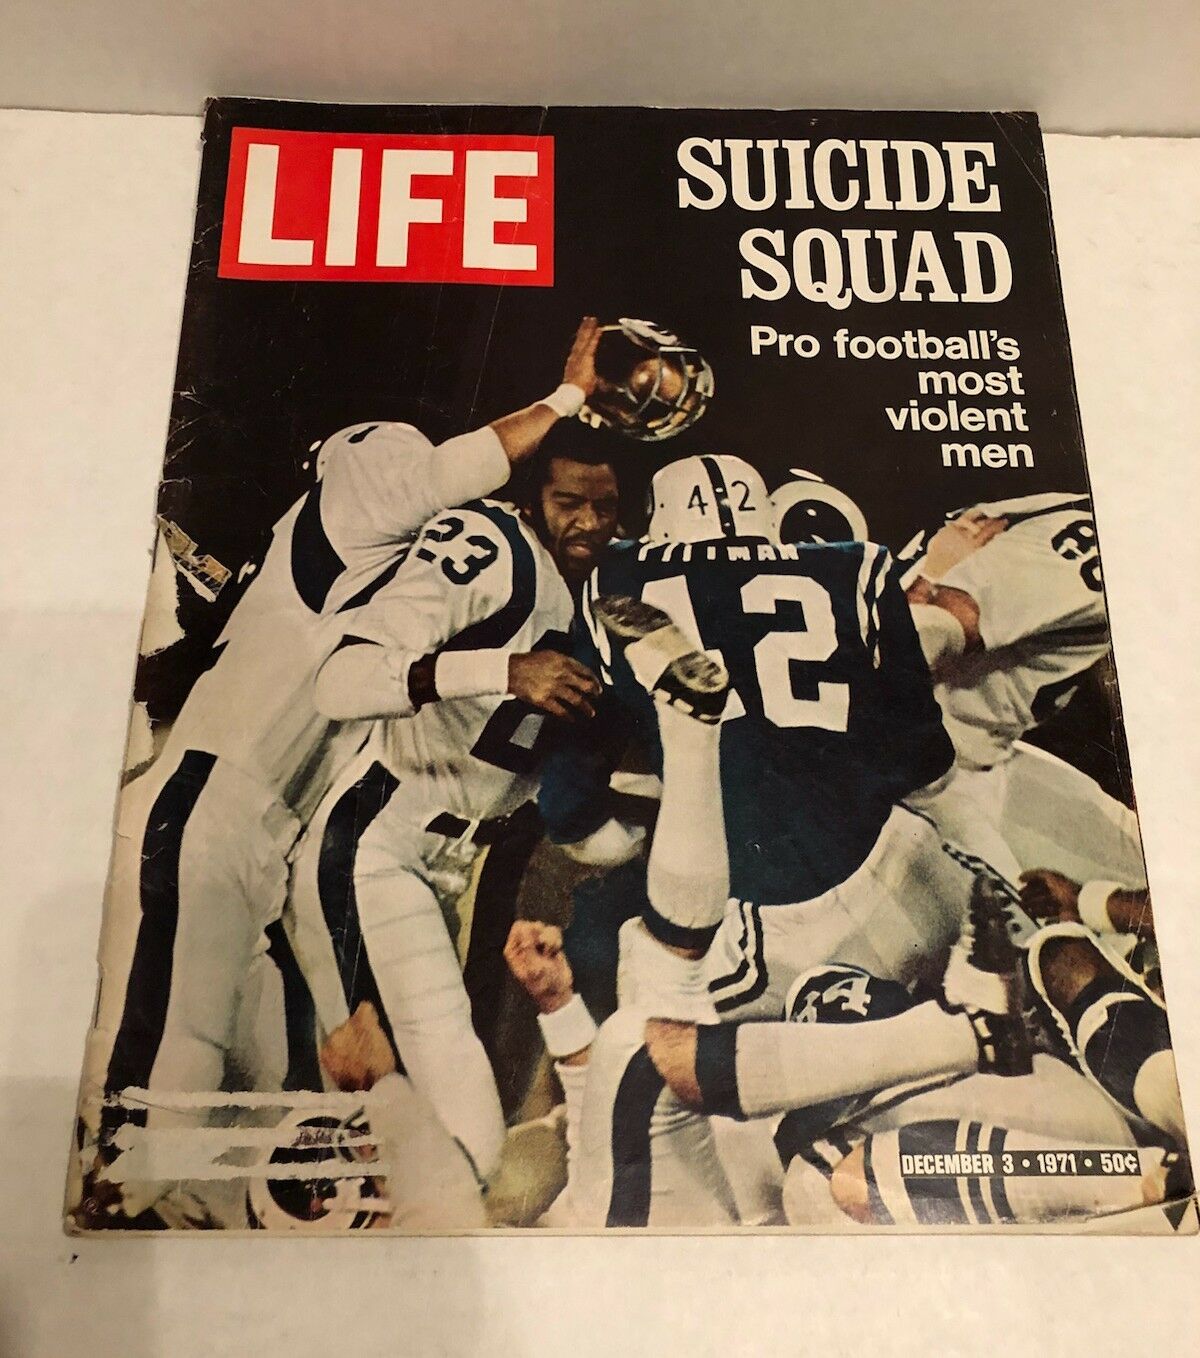 LIFE Magazine - December 3, 1971